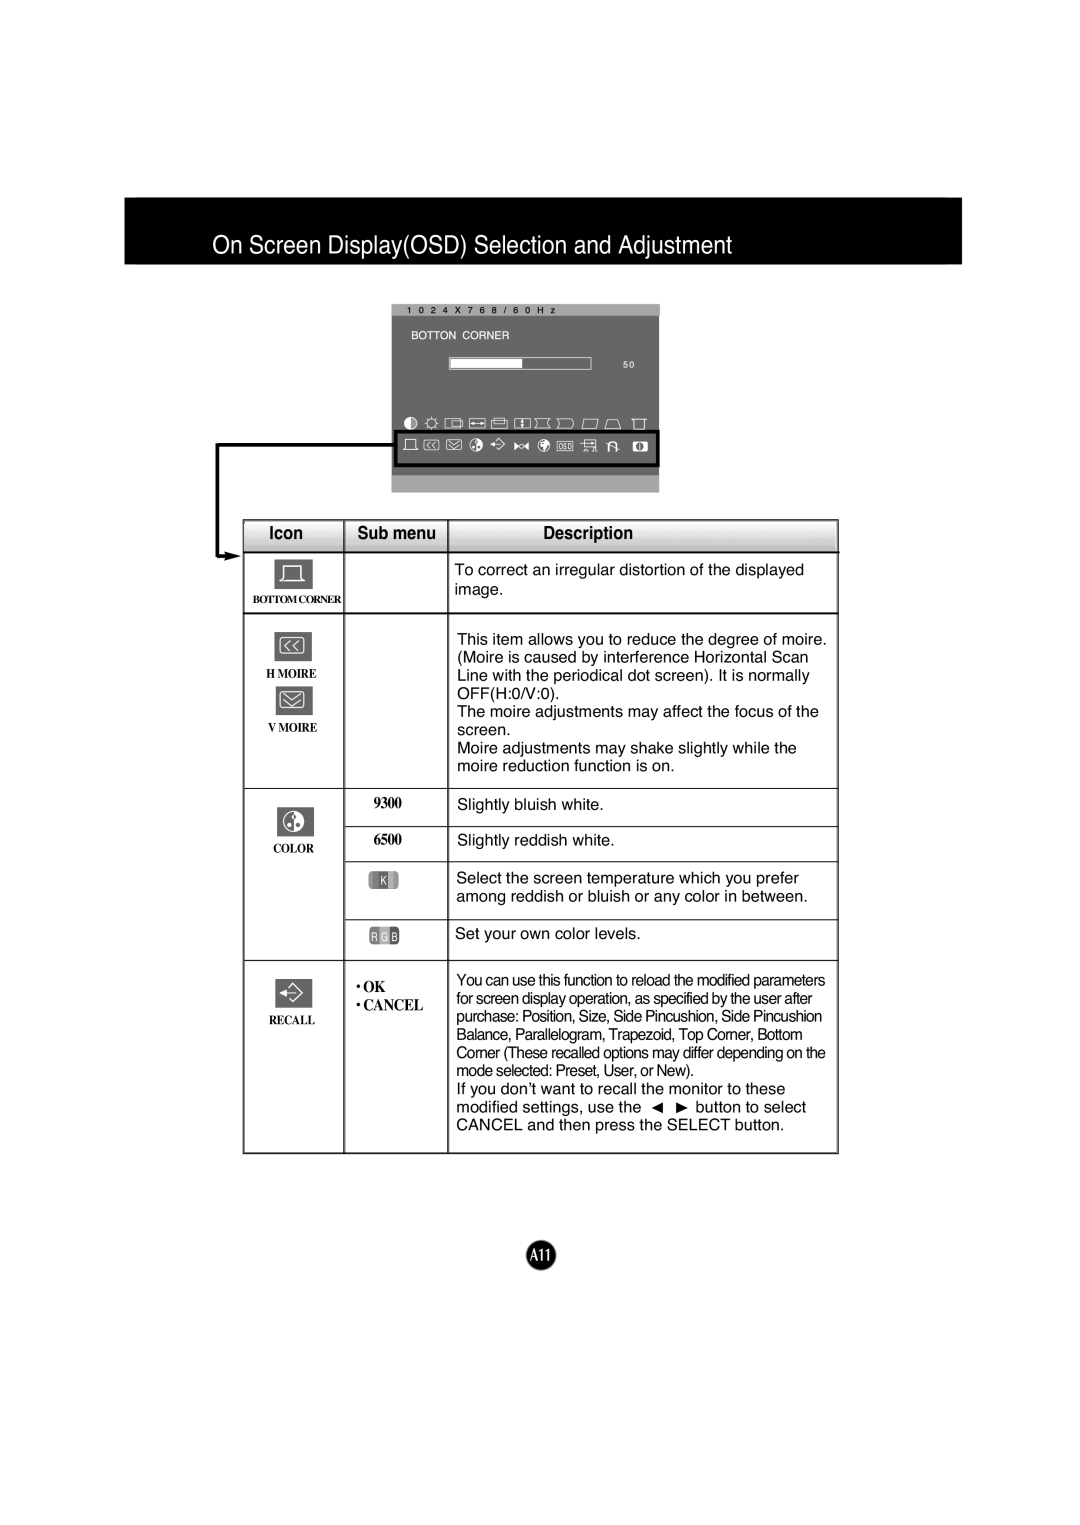 IBM 6518 - 4LE manual On Screen DisplayOSD Selection and Adjustment 